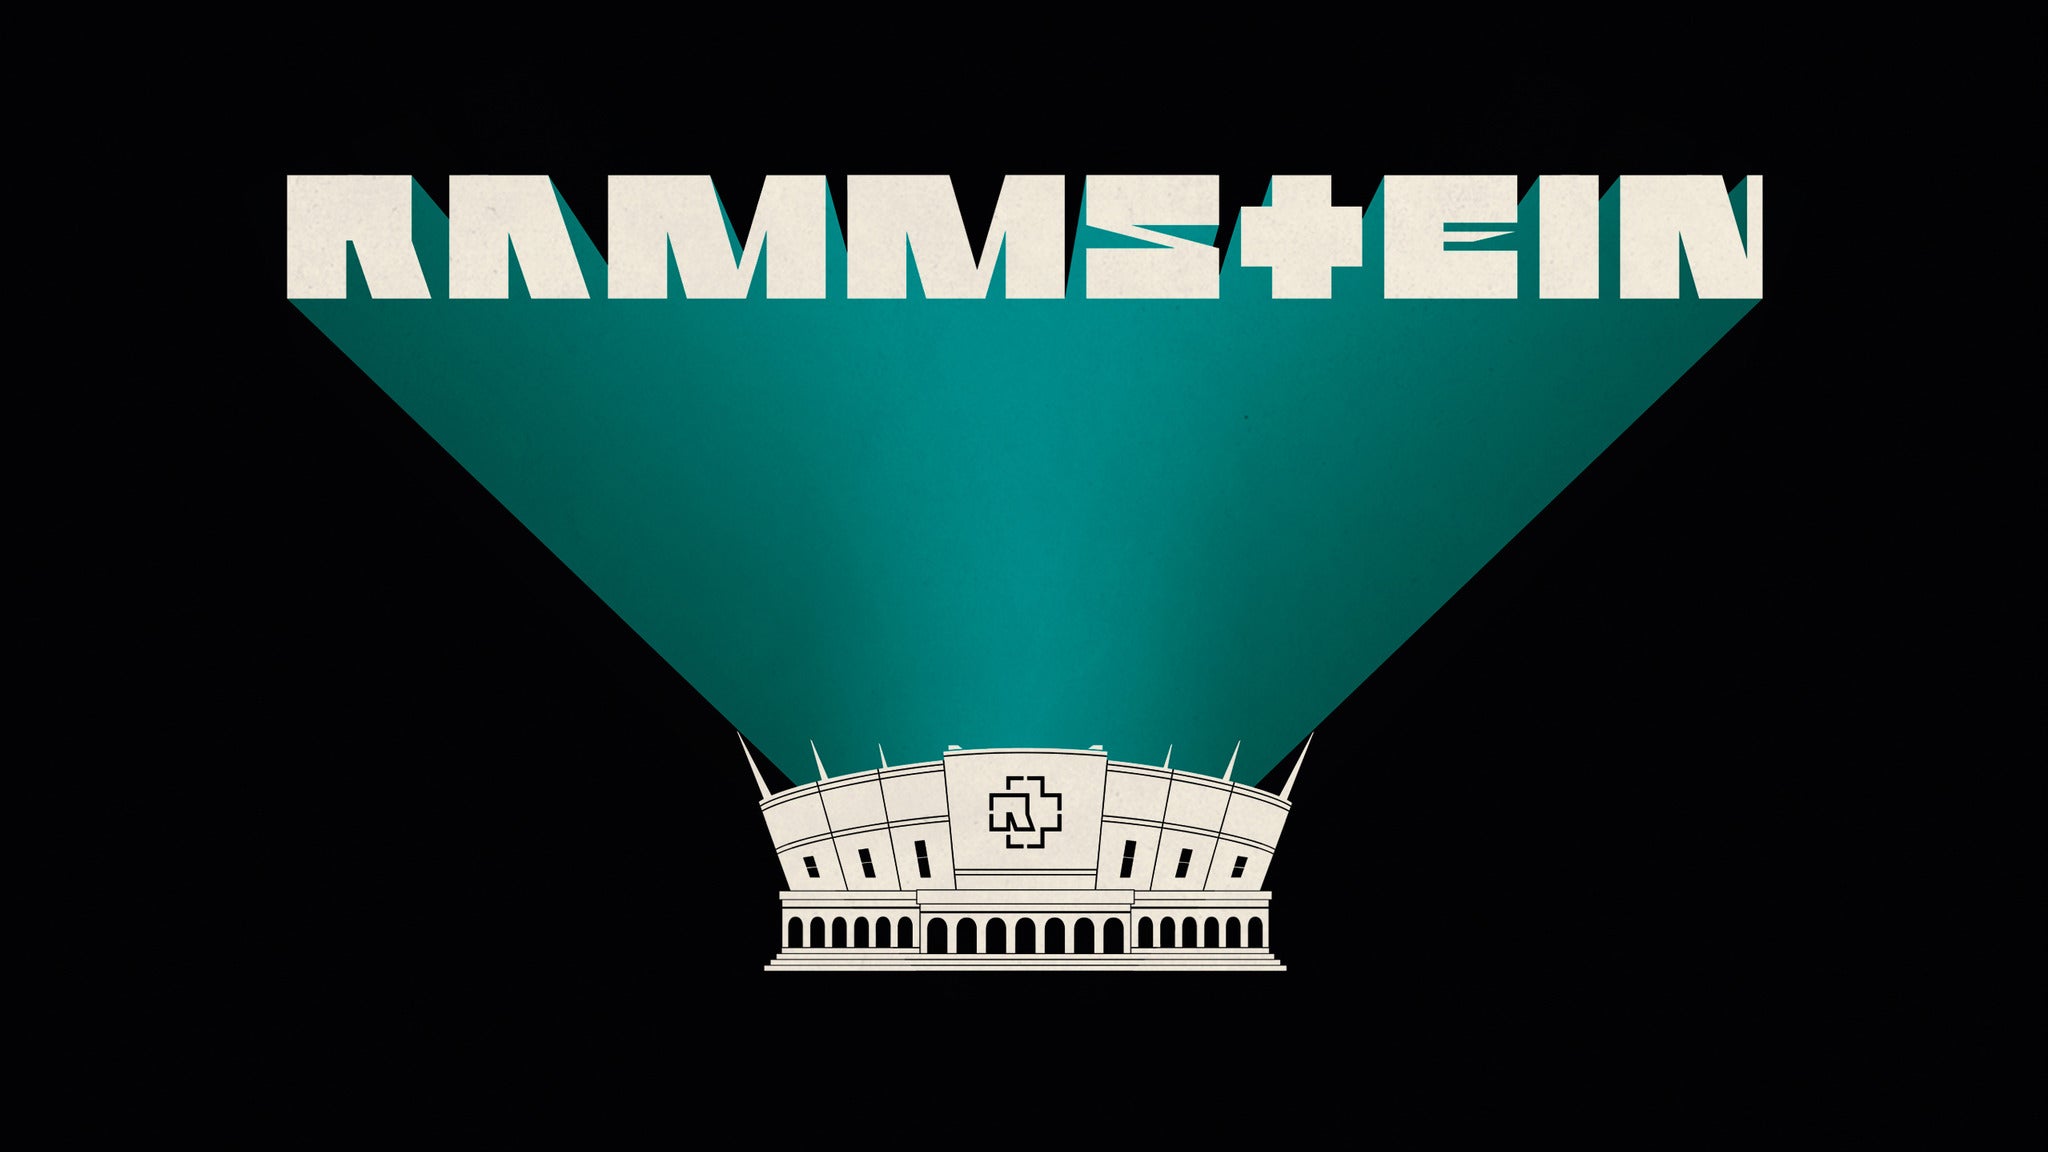 Rammstein – North America Stadium Tour